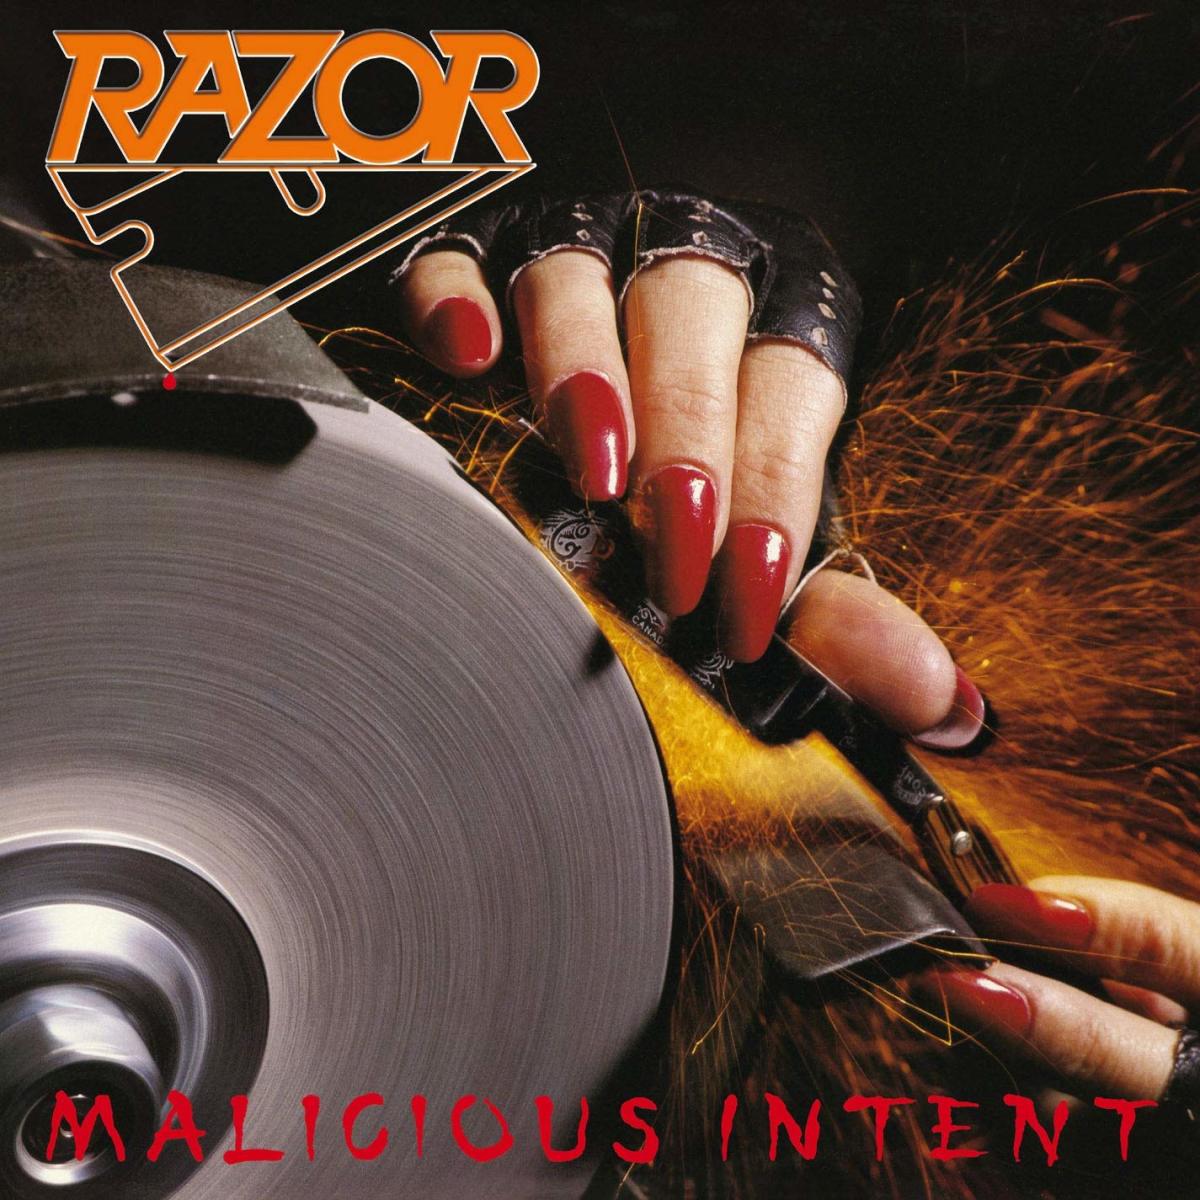 Looking Back at Razor’s 1986 Studio Album 